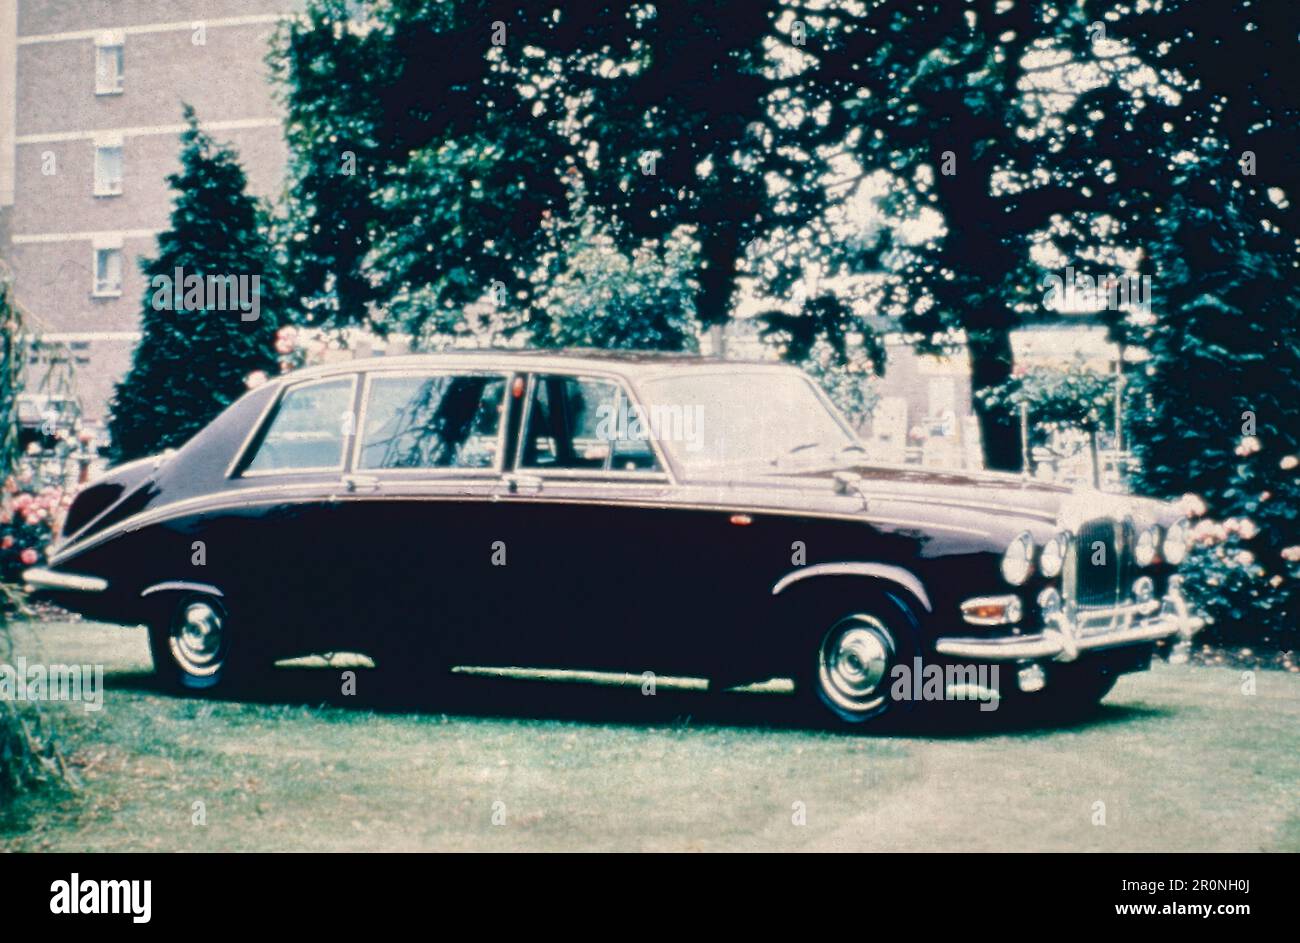 Daimler car model Limousine Executive, UK 1984 Stock Photo